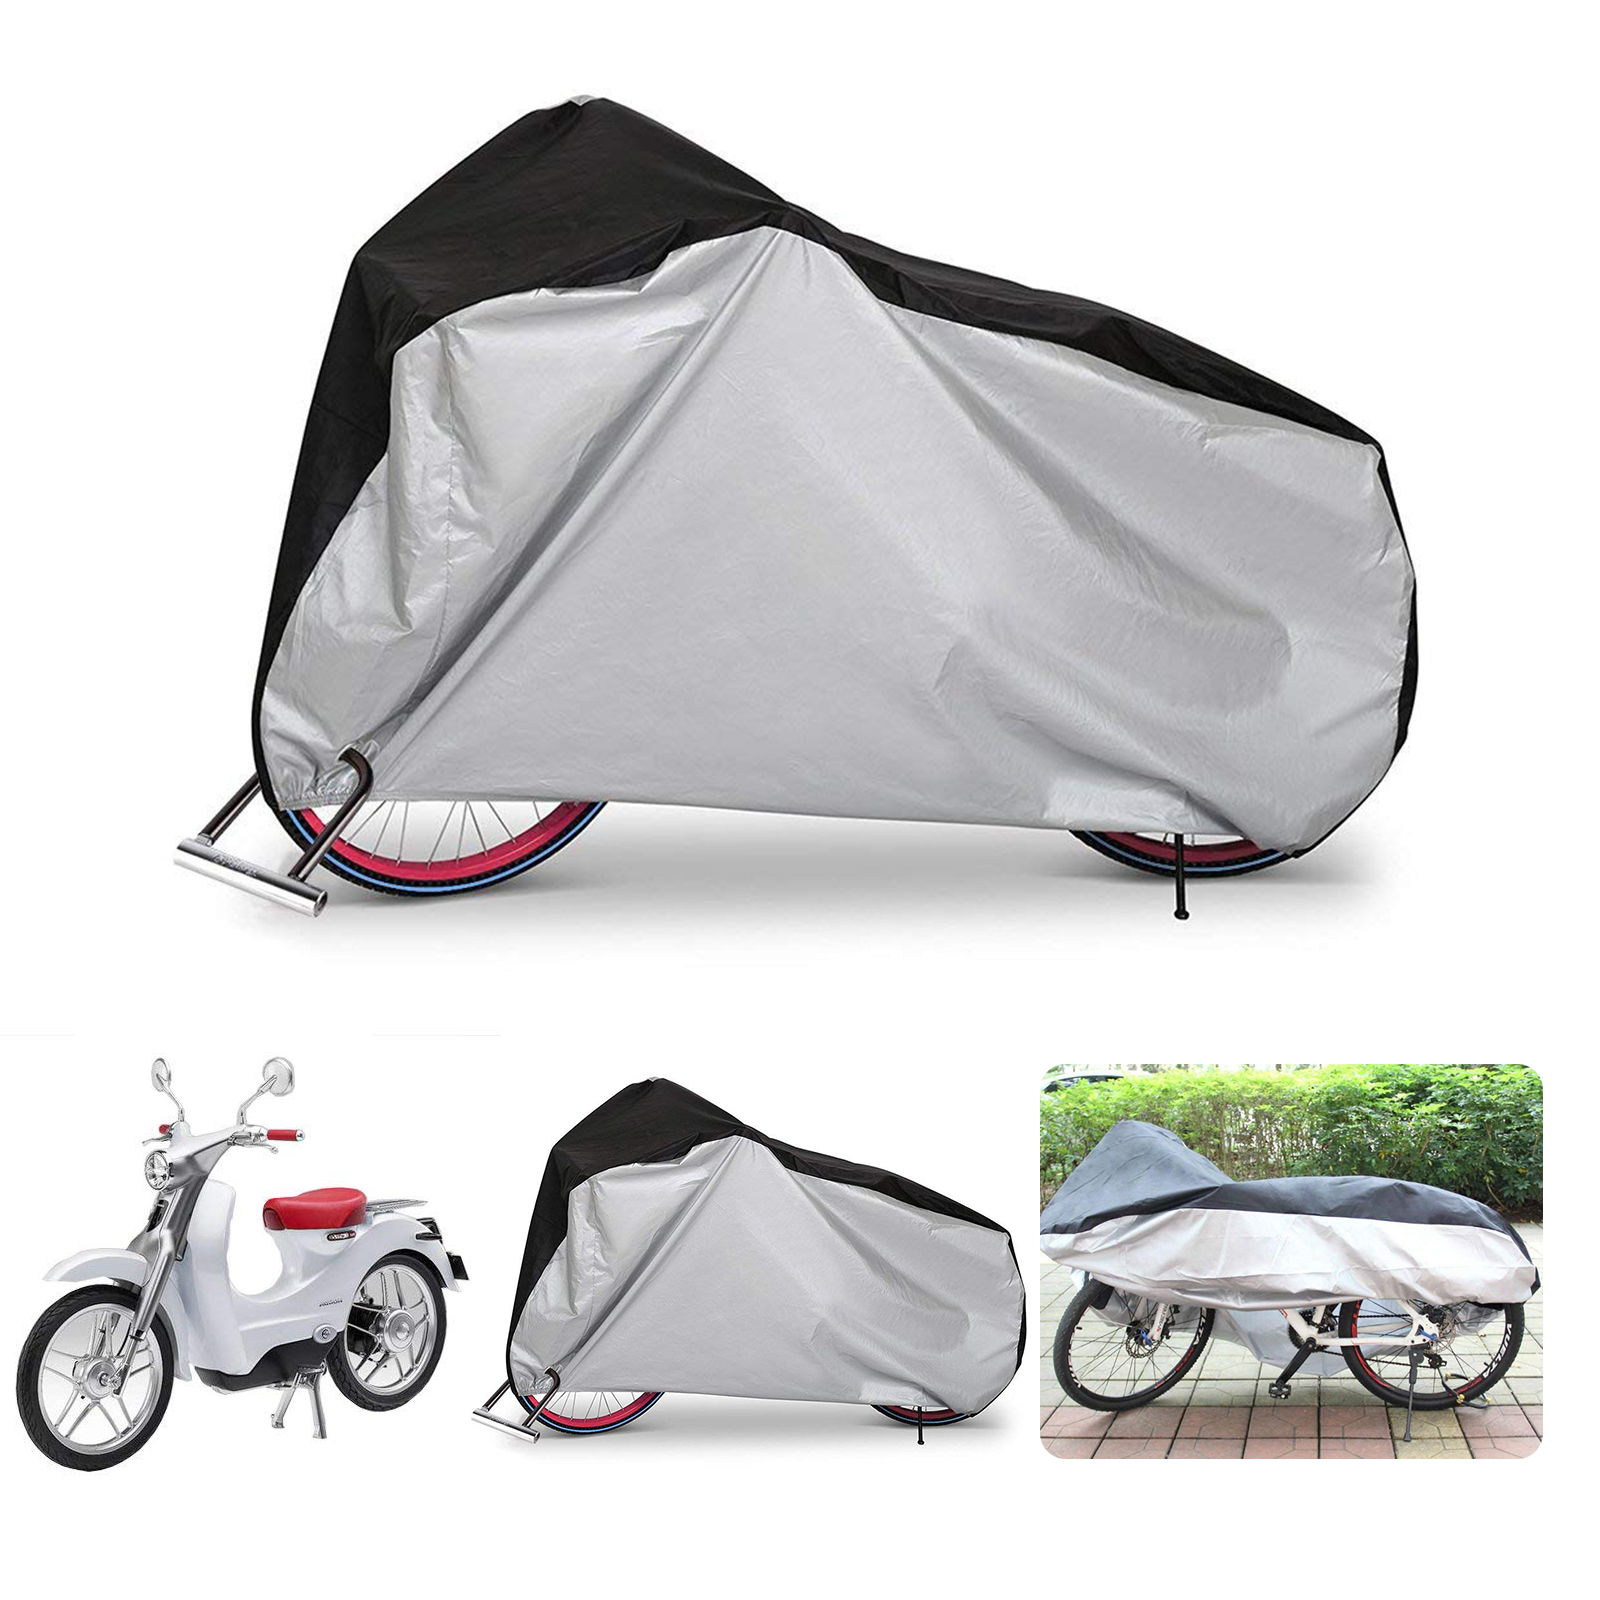 Universal Waterproof Nylon Bicycle Cycle Bike Cover Outdoor Rain Dust Protector Ebay